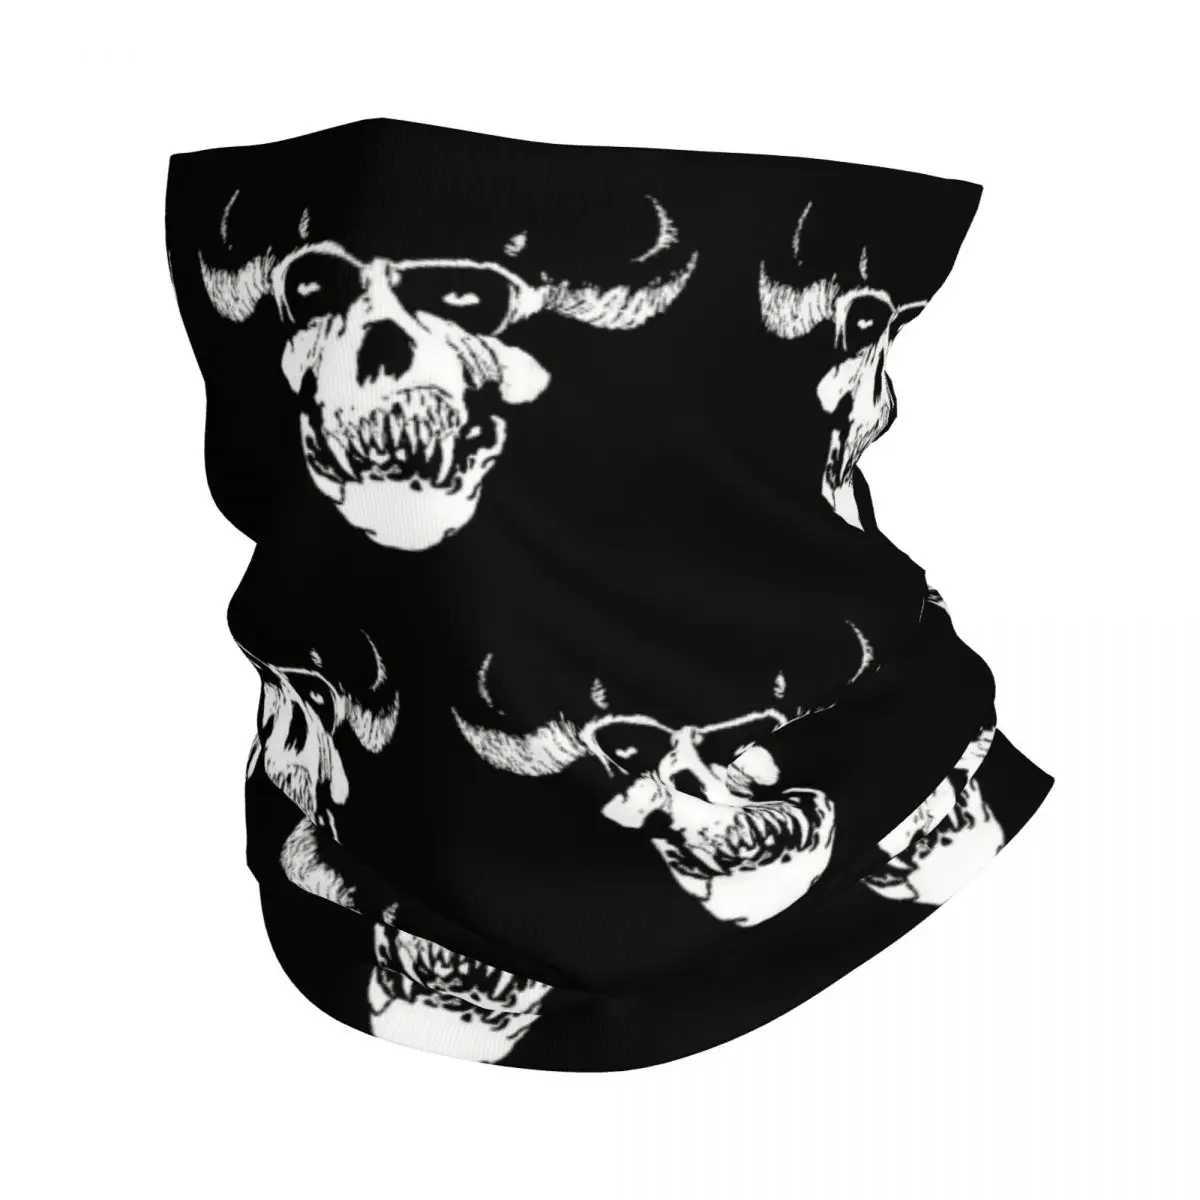 

Danzigs Glenn Skull Bandana Neck Cover Printed Metal Band Mask Scarf Multi-use Headwear Outdoor Sports for Men Women Breathable